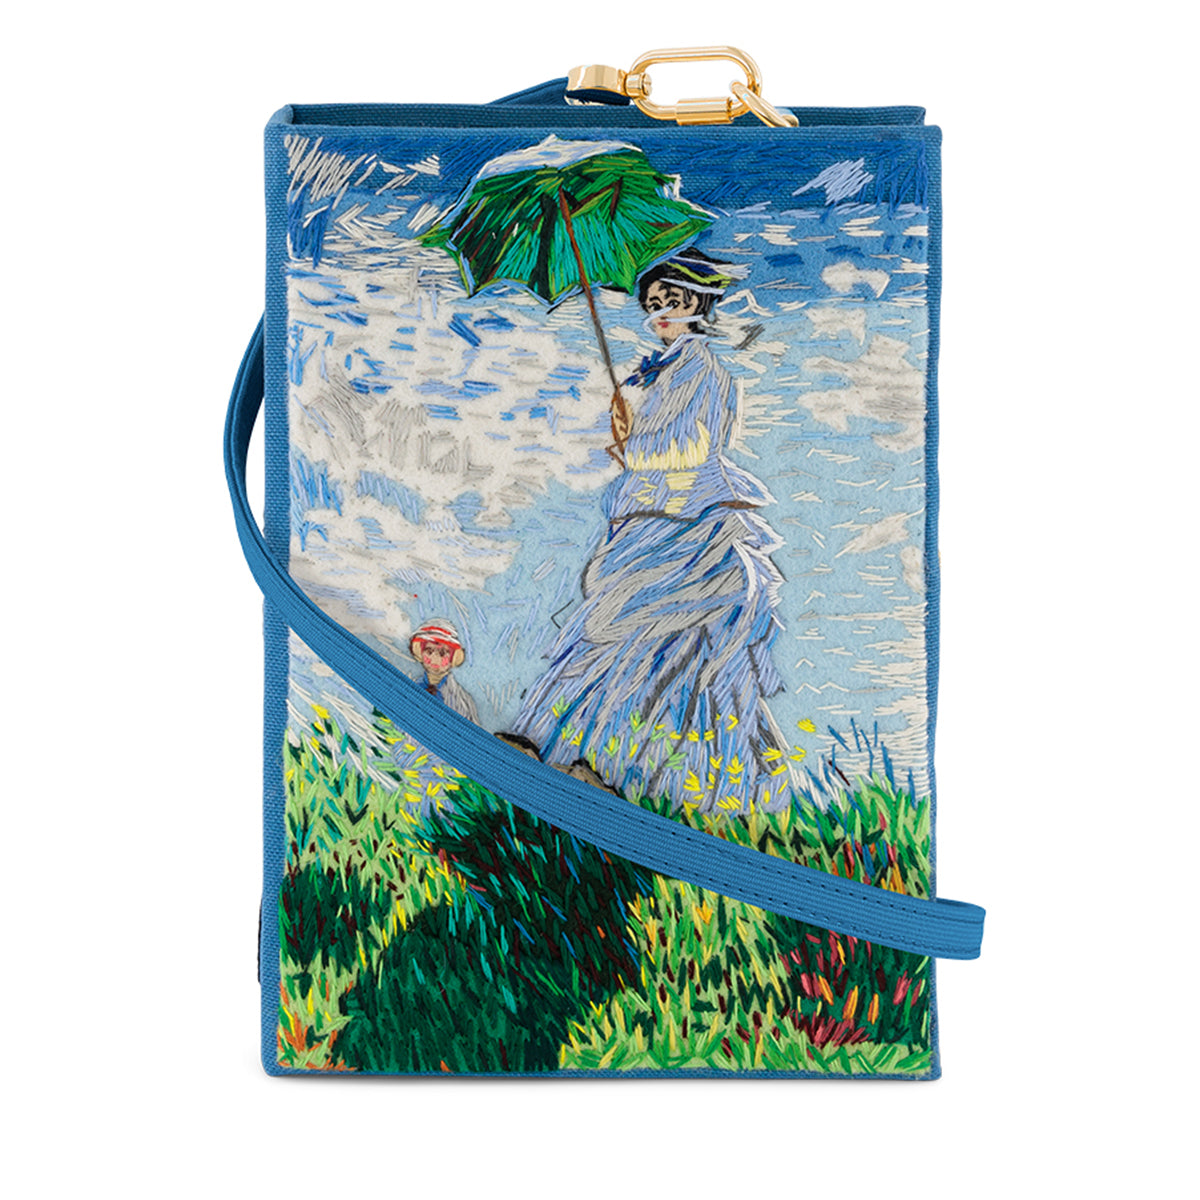 Olympia Le-Tan Degas Book Clutch Bag